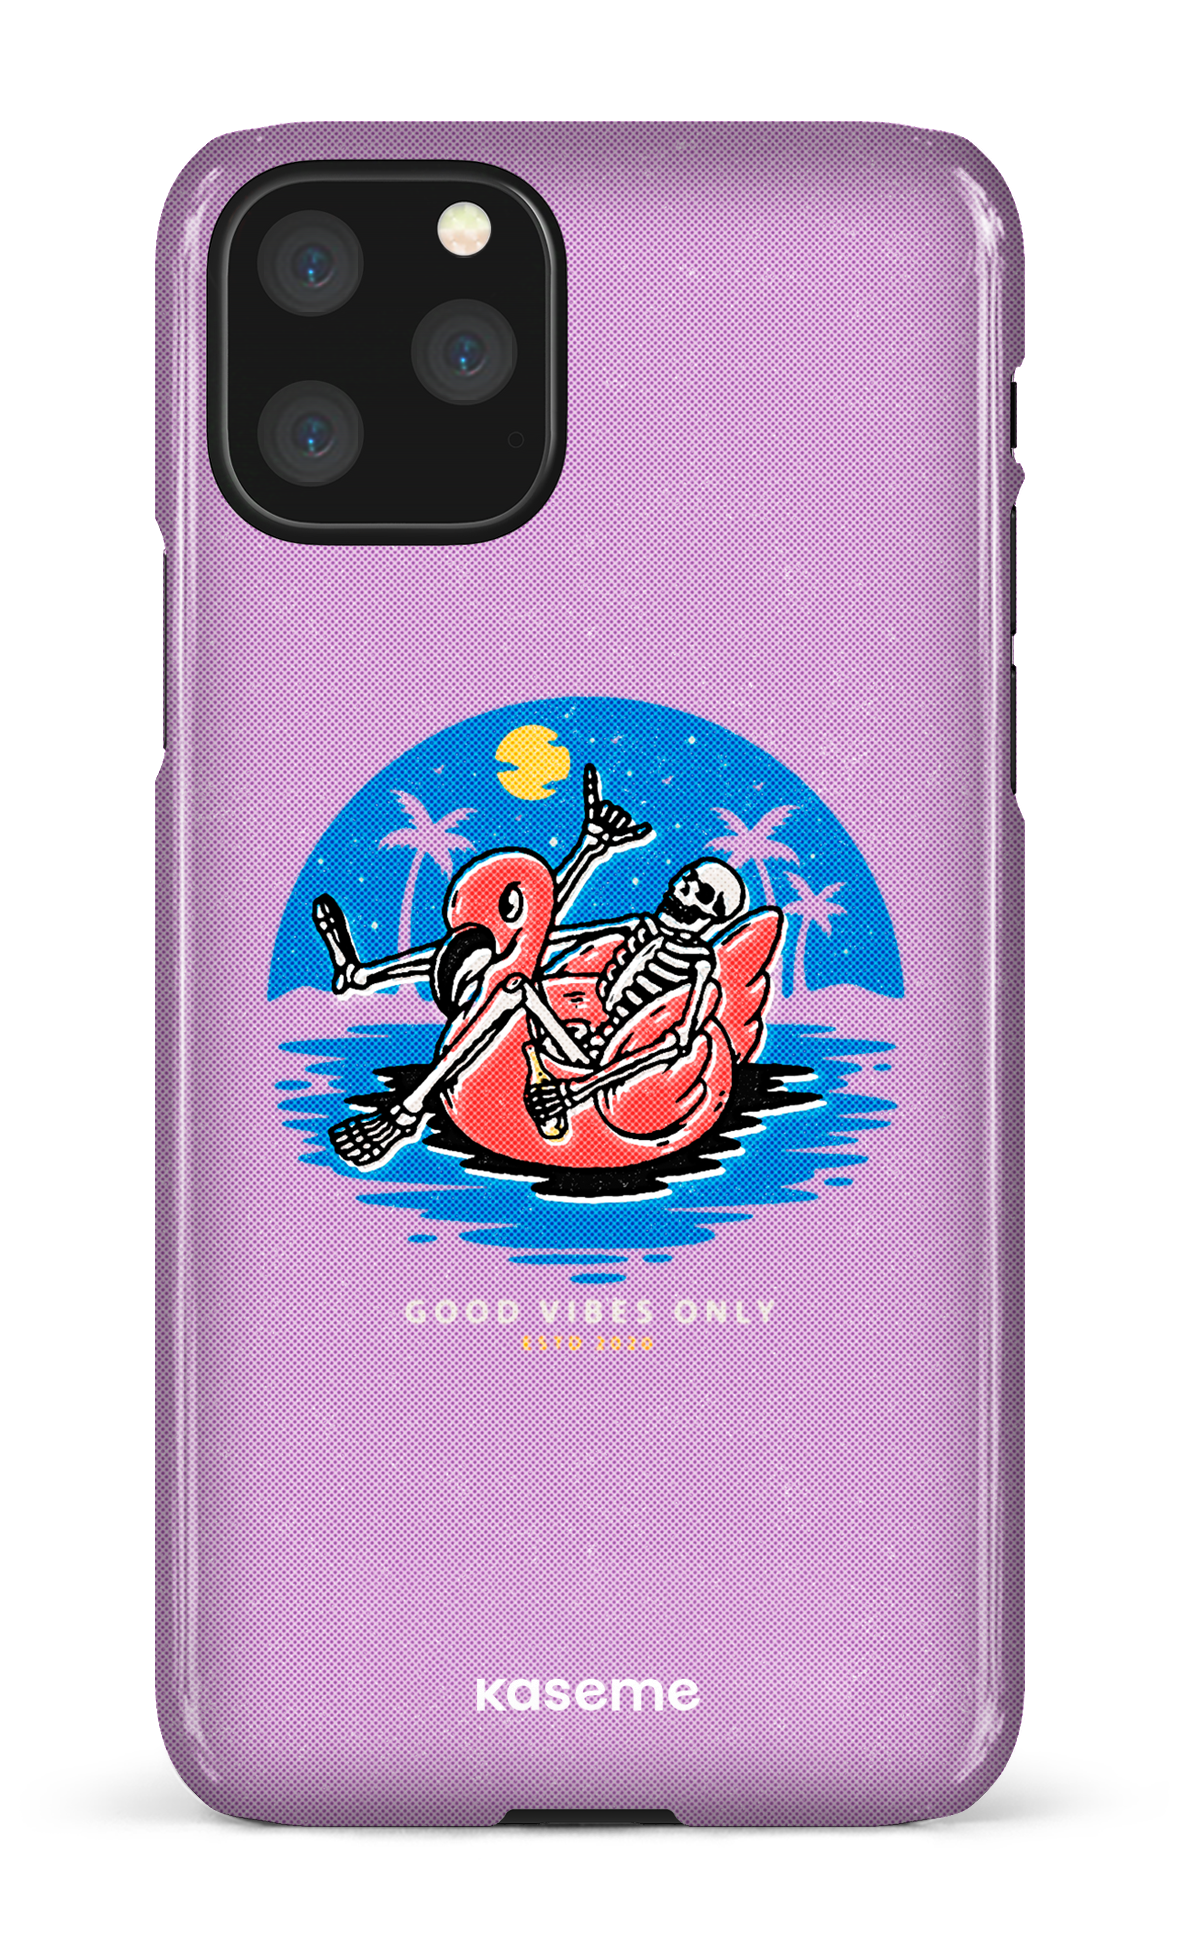 Seaside purple - iPhone 11 Pro